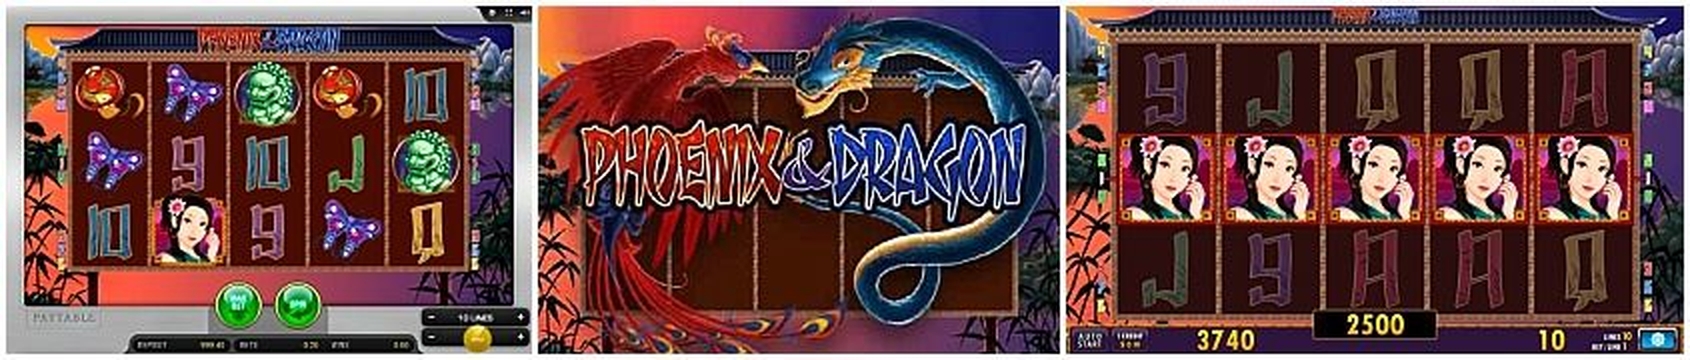 Phoenix & Dragon HD